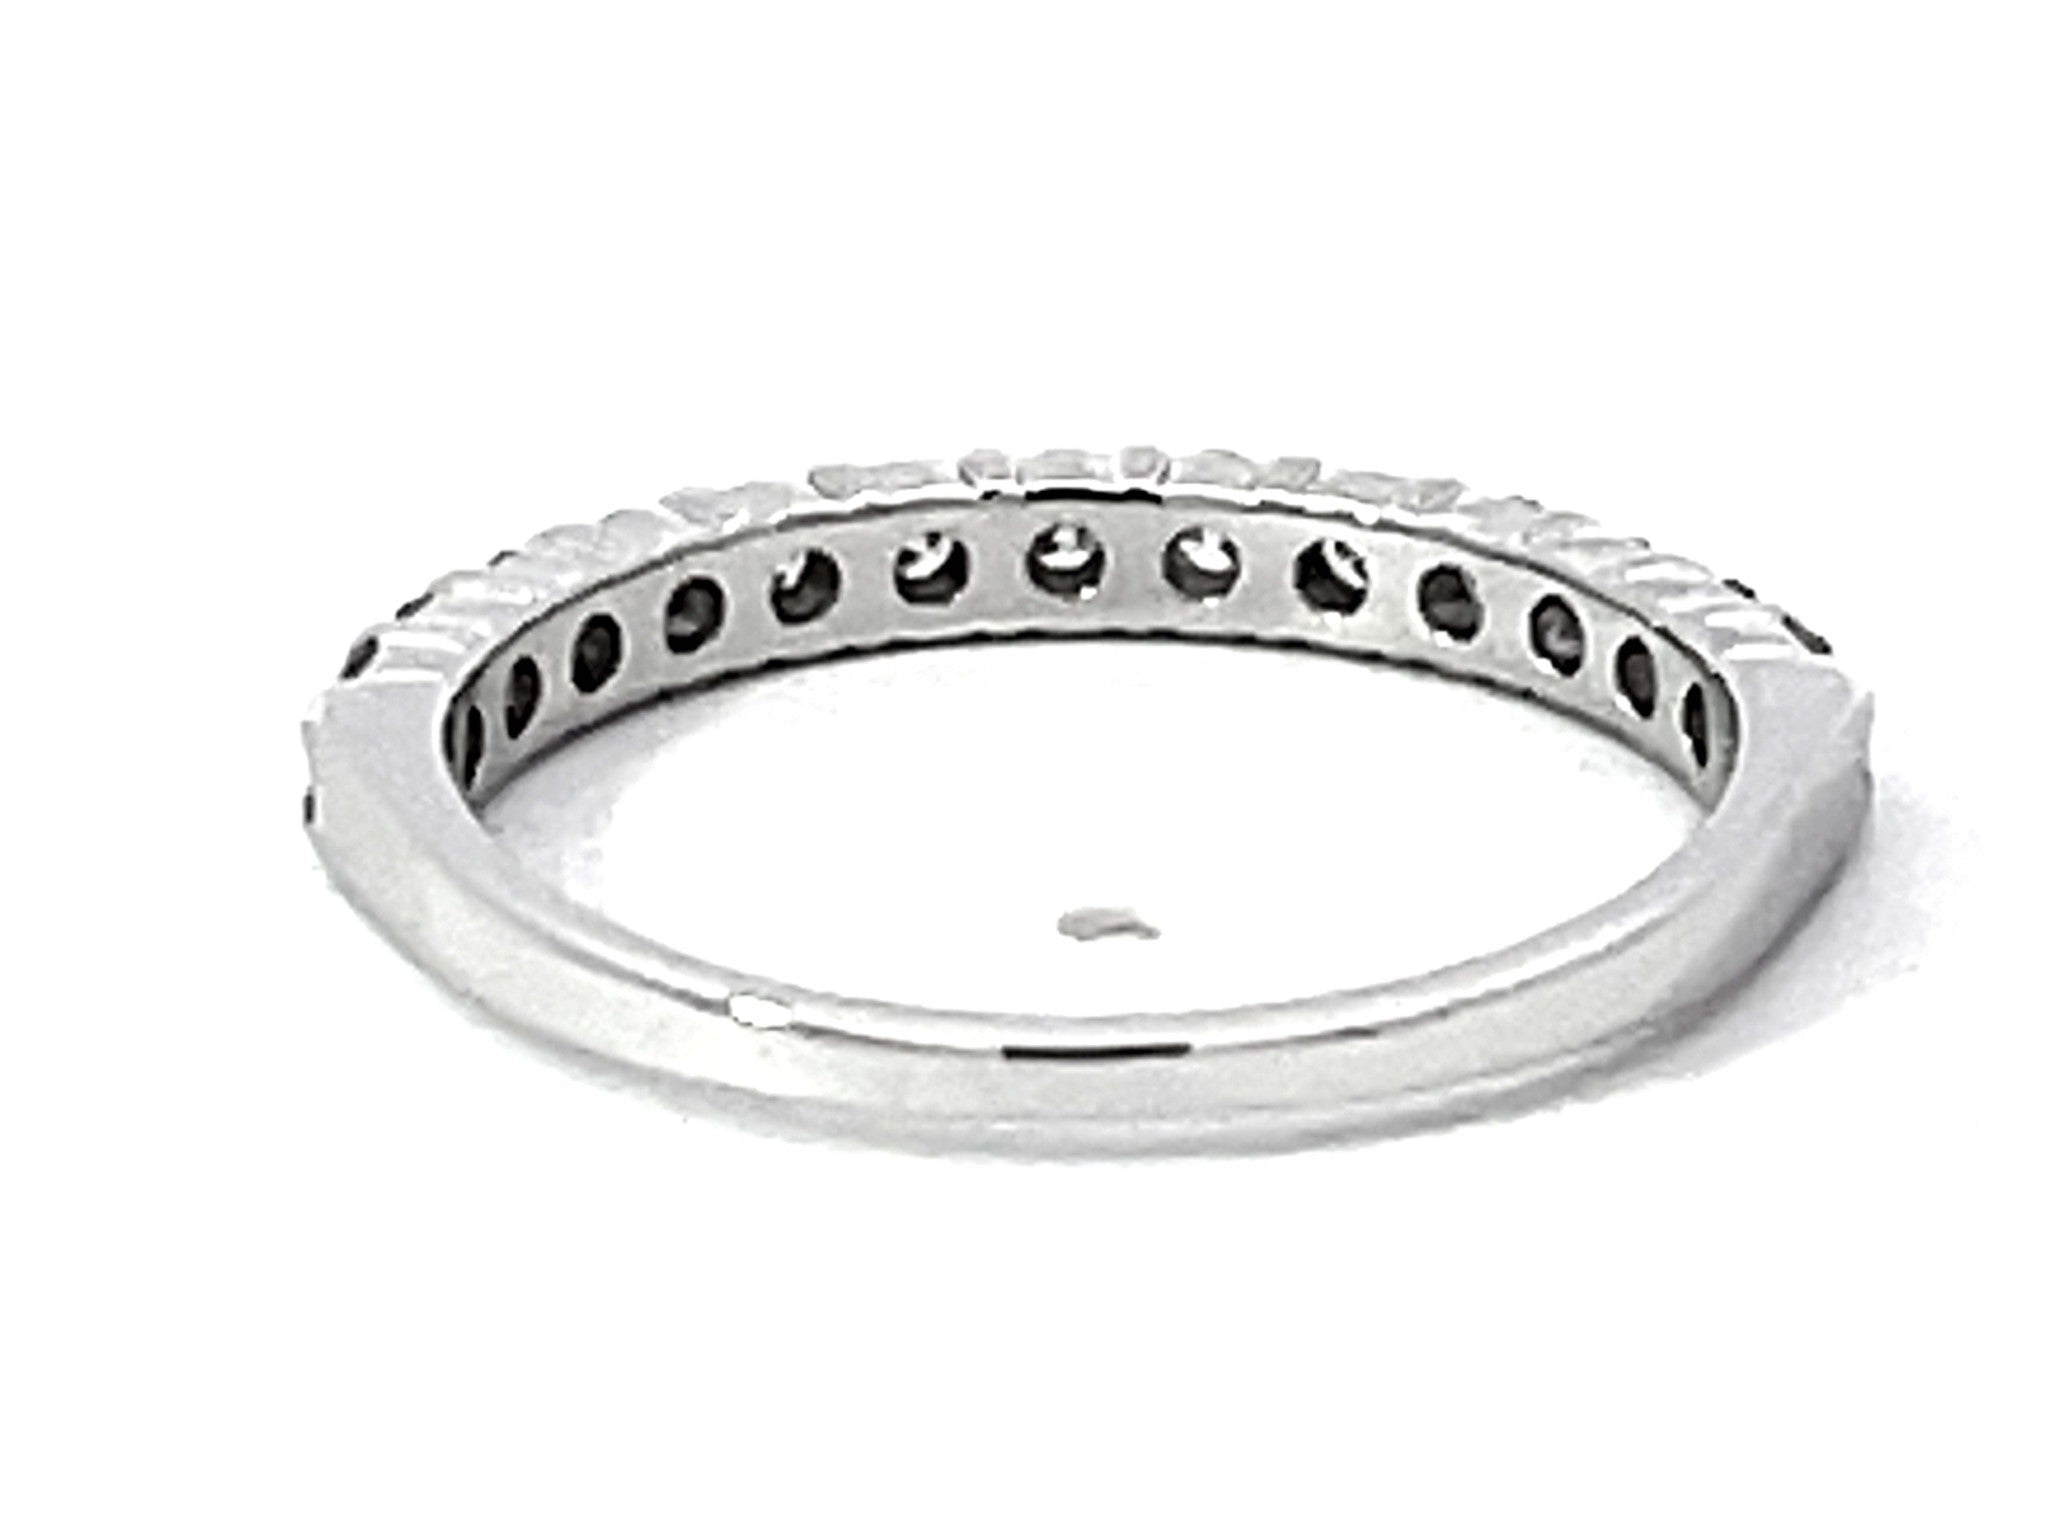 Brilliant Cut Diamond Band Ring Solid 14k White Gold